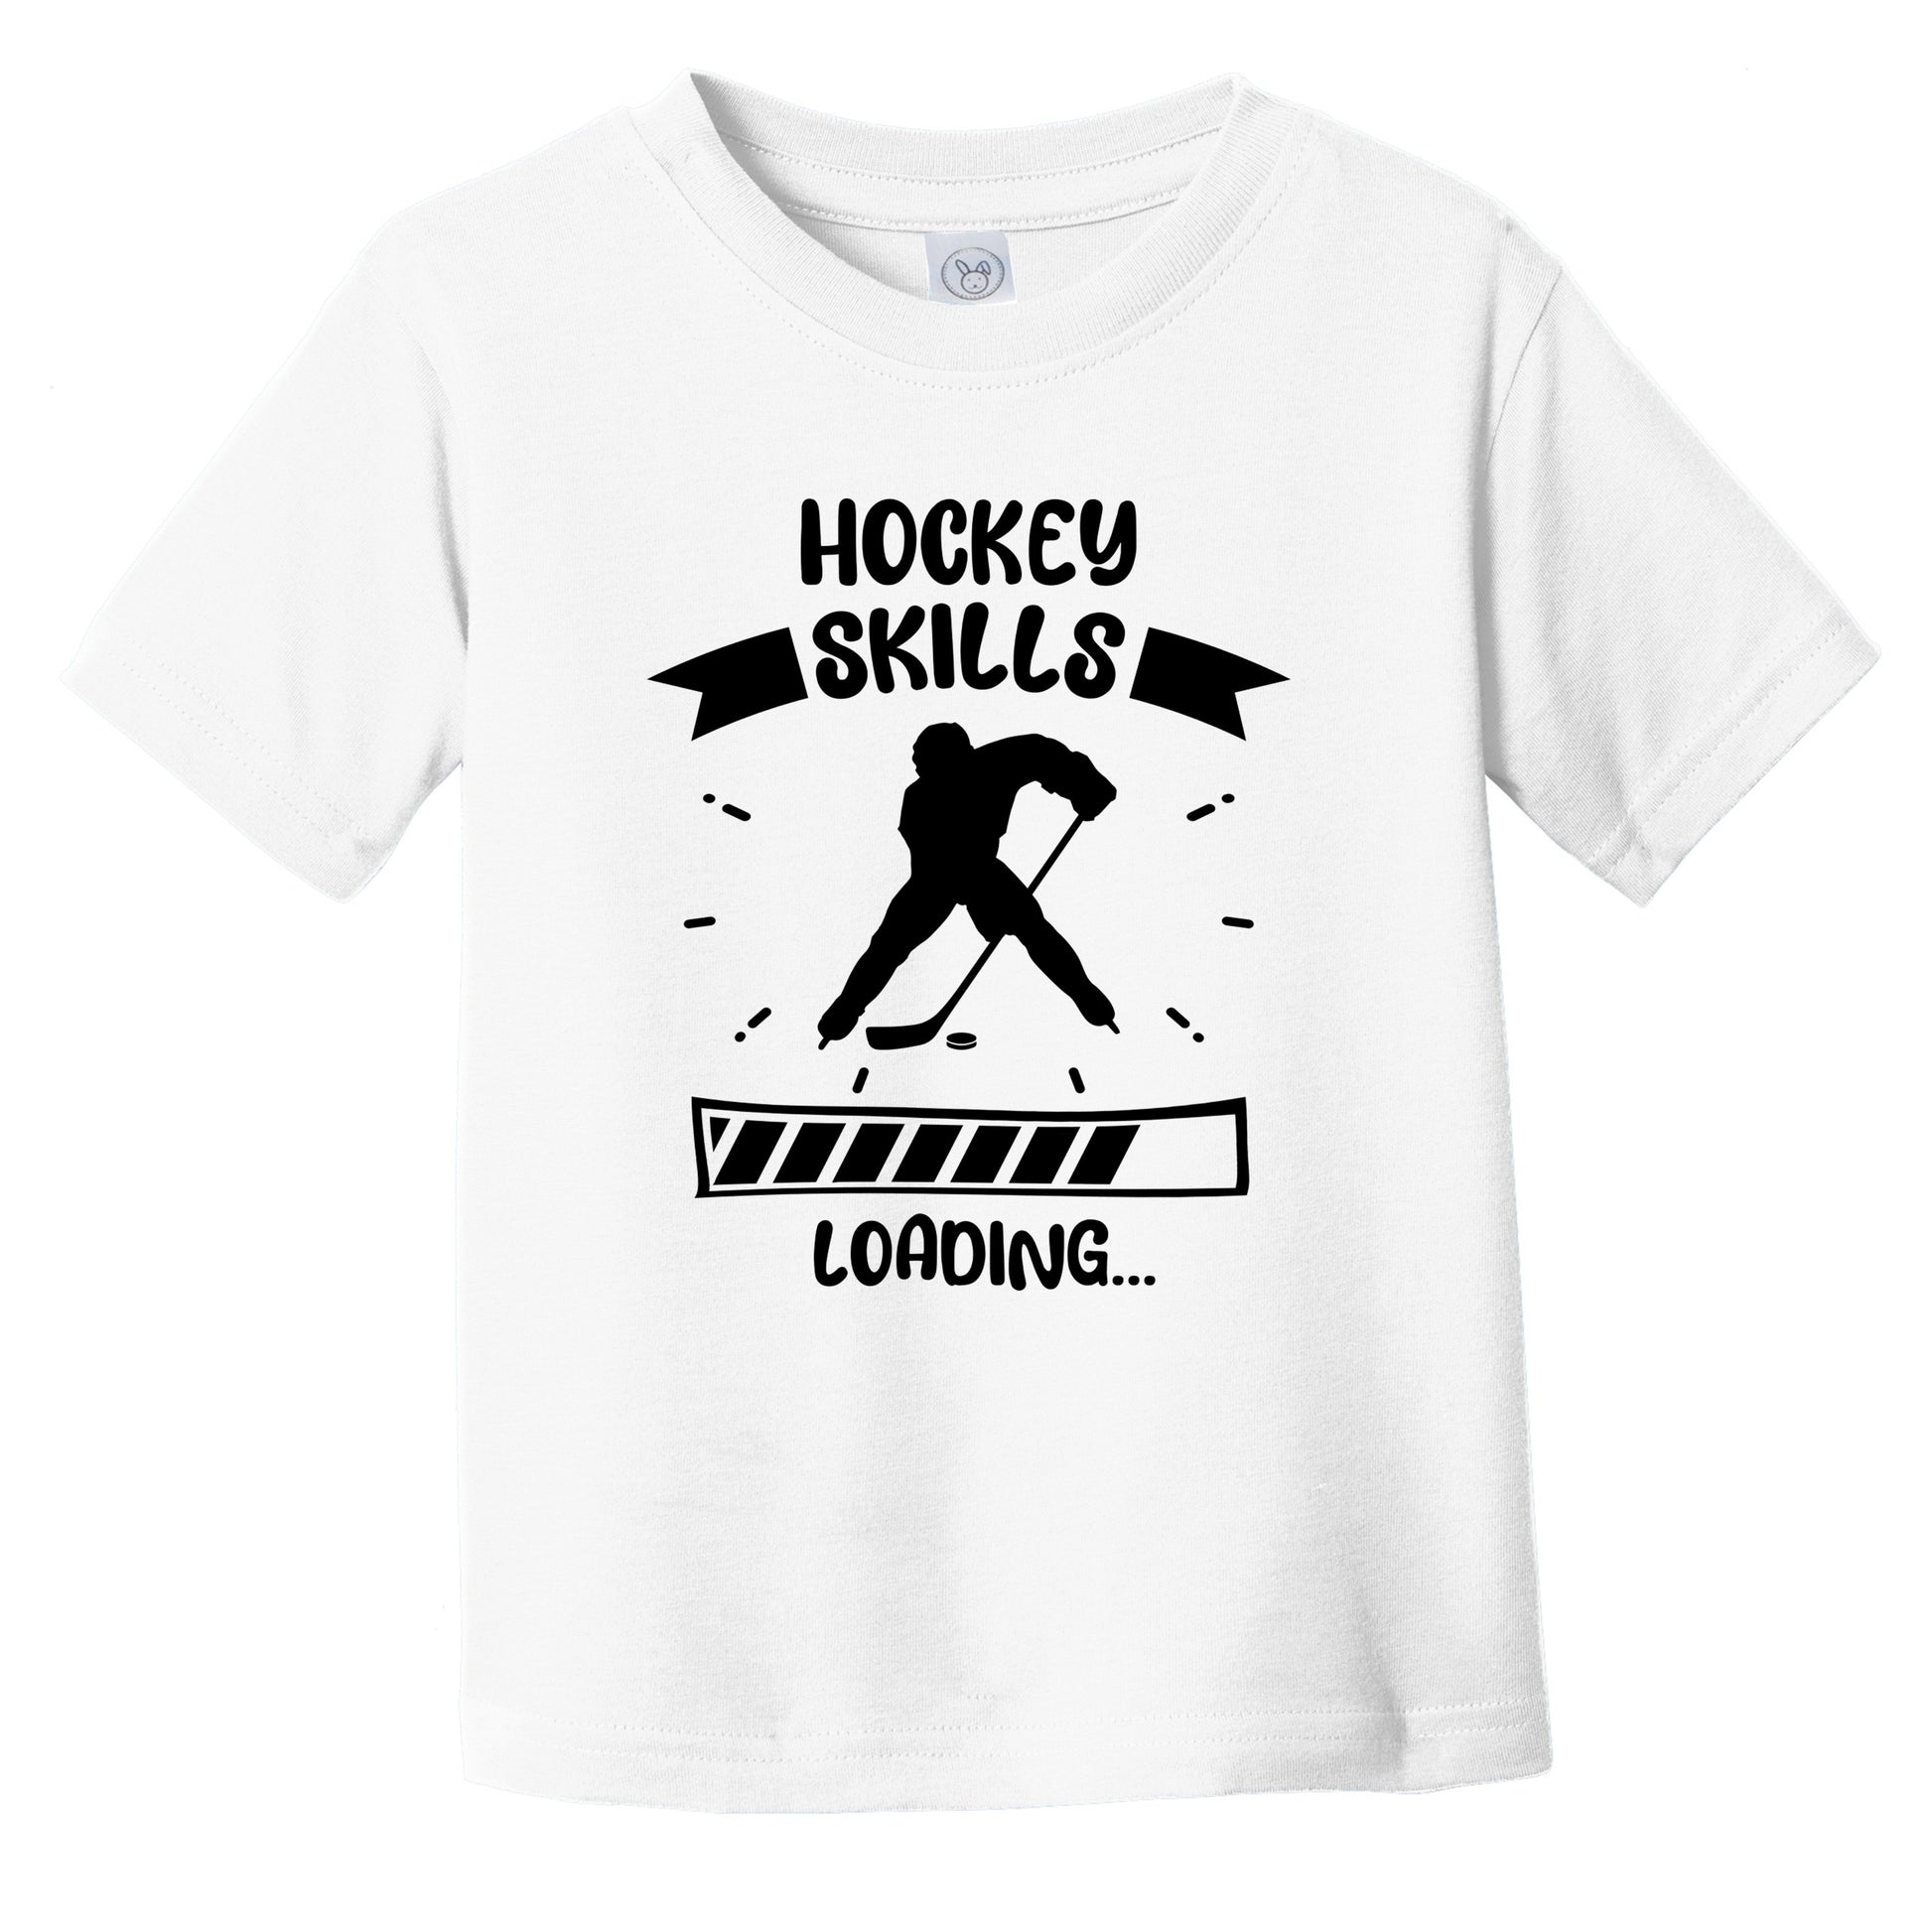 Mens Field Hockey Dad Player Hockey Fan T-Shirt